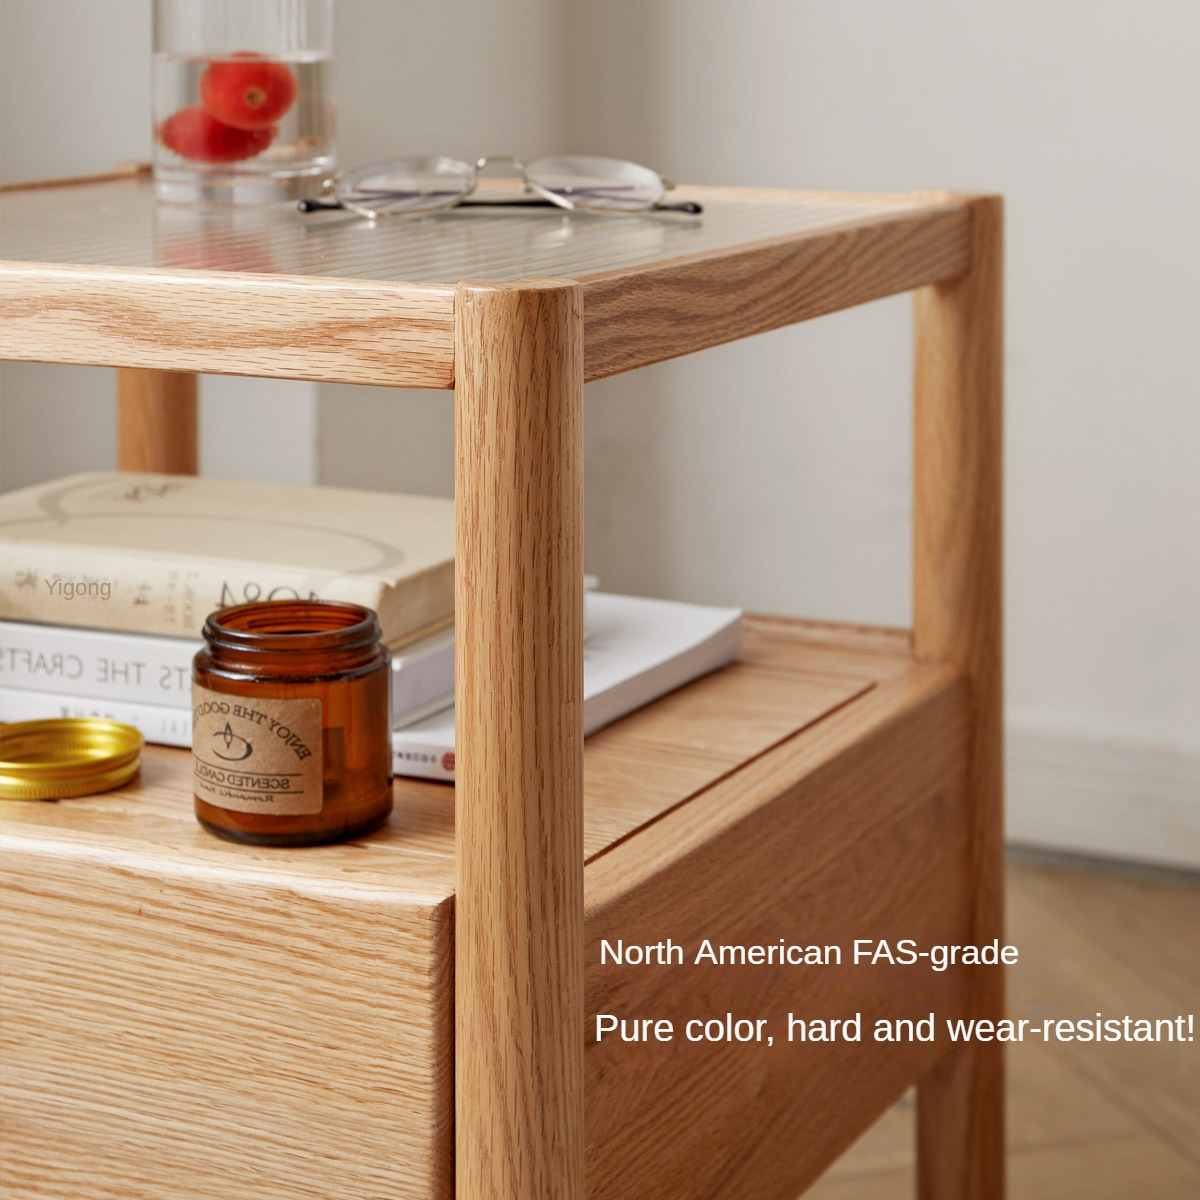 Oak solid wood nightstand Japanese style "